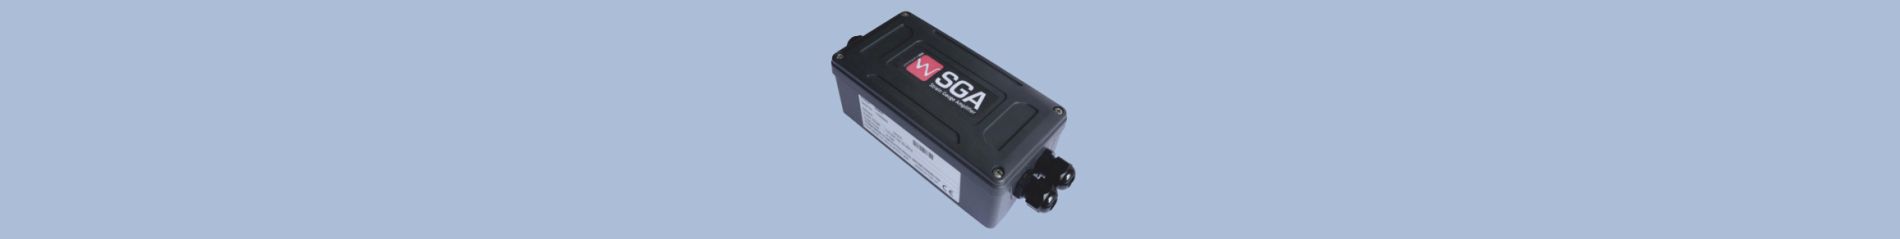 Marathon Special Products SGA/A Strain Guage Transducer Amplifier 